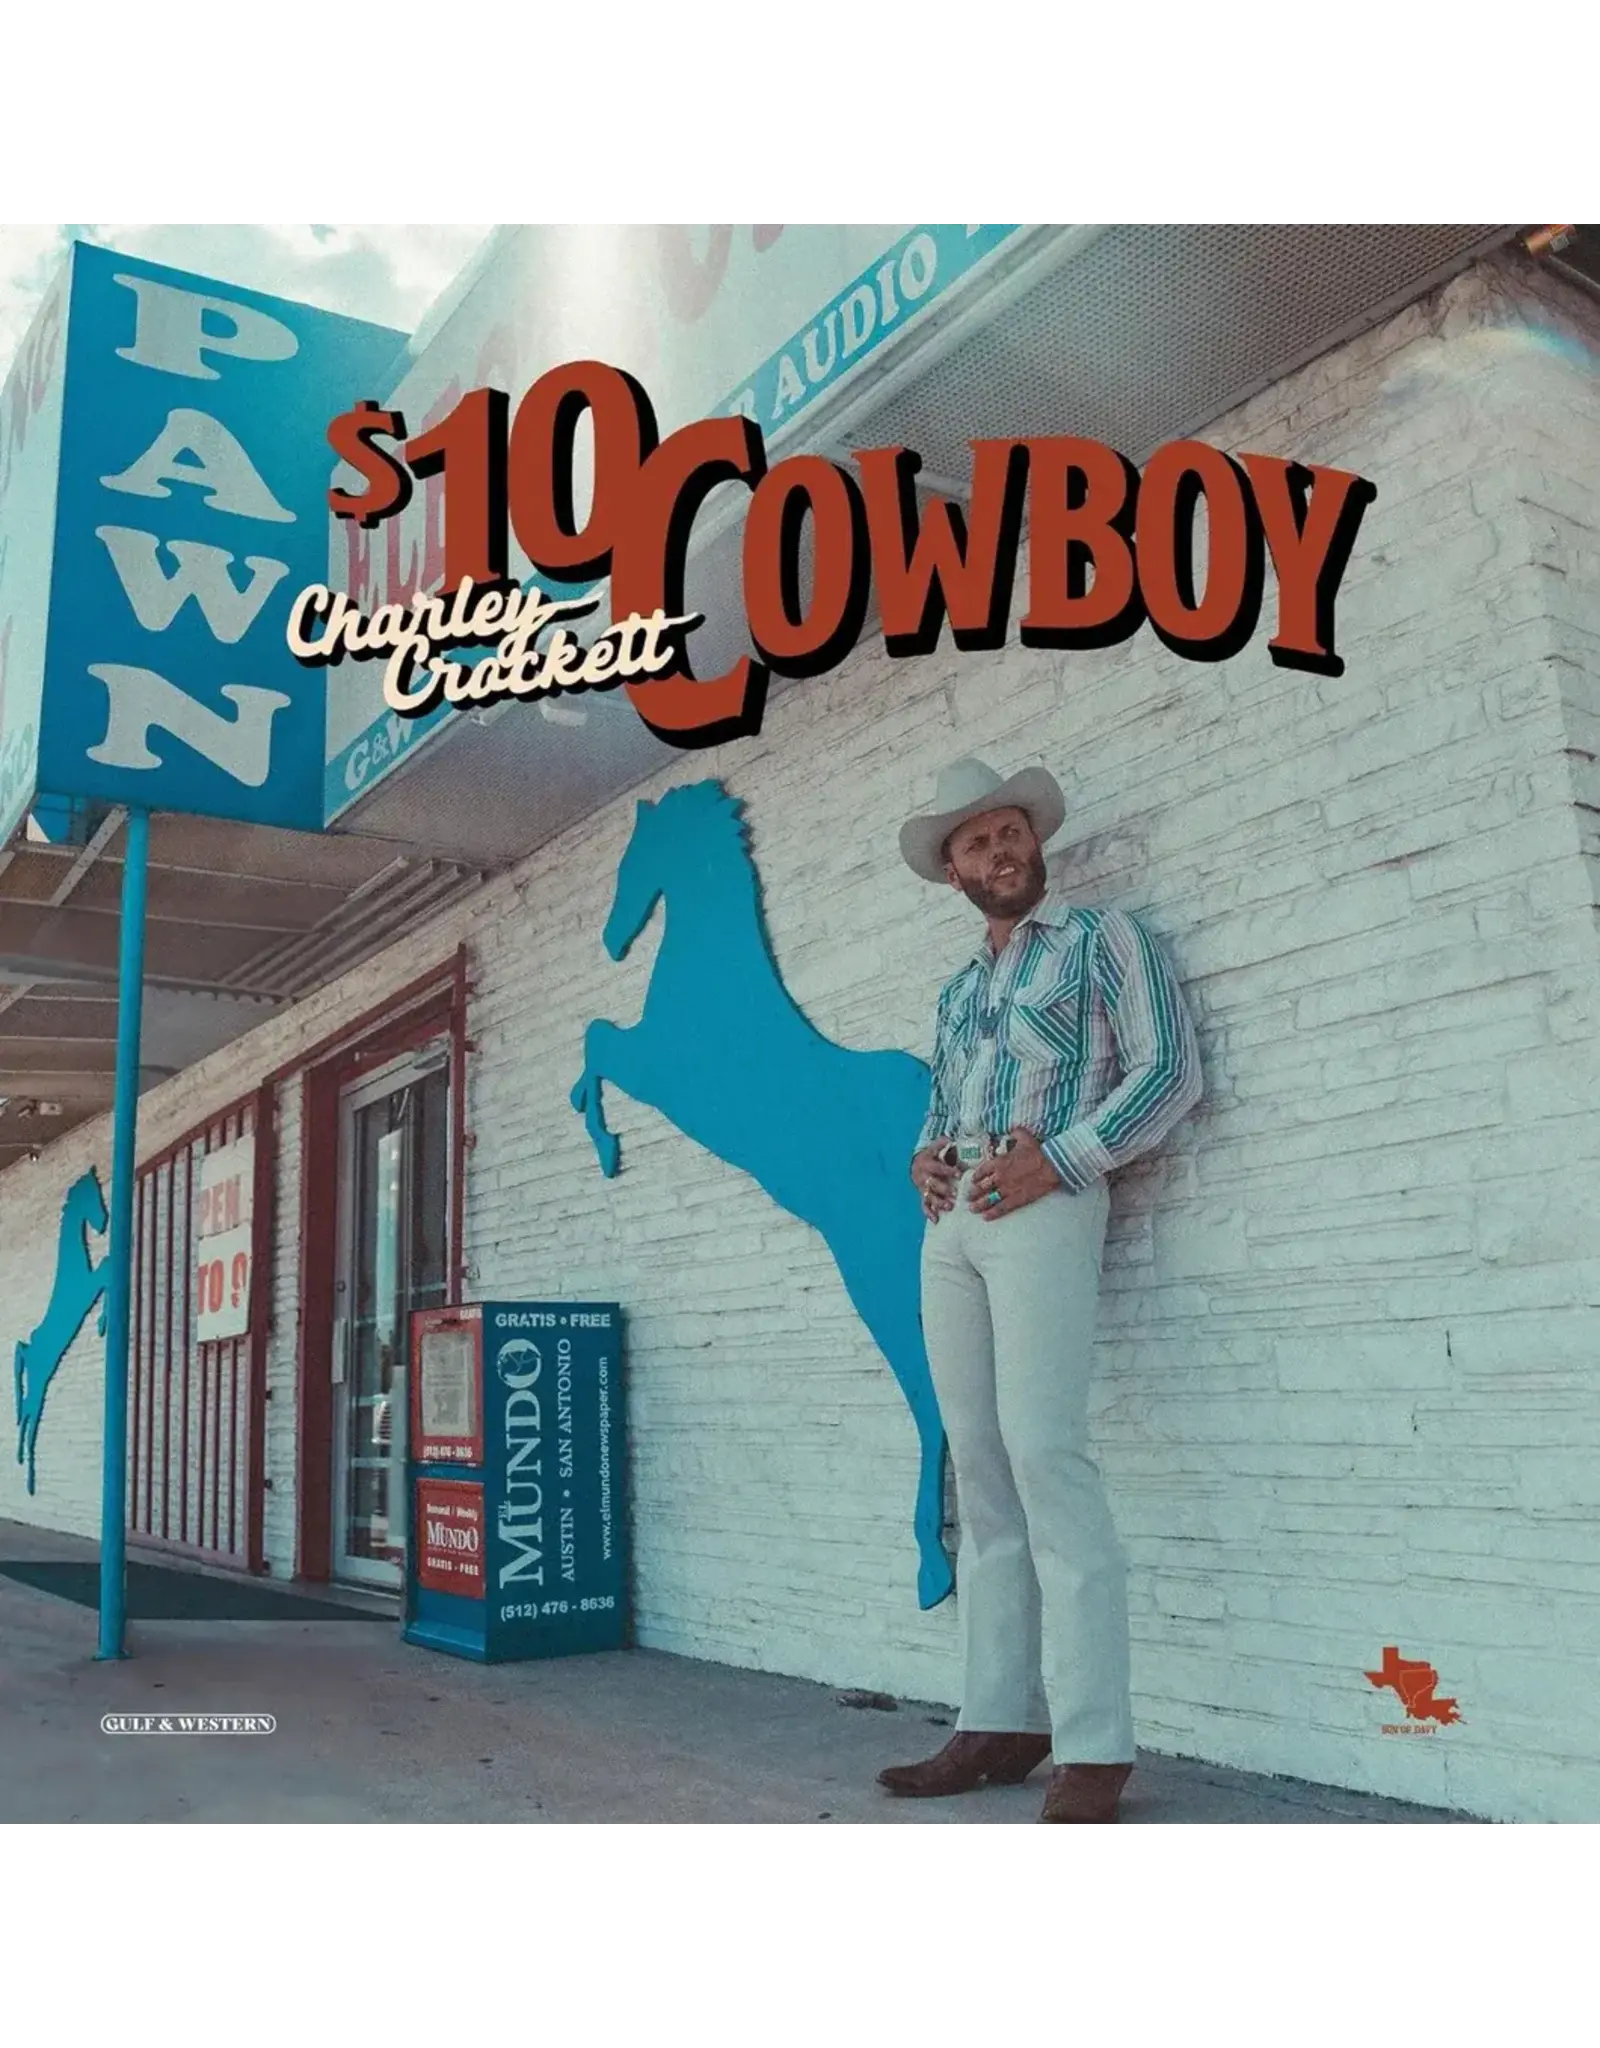 Charley Crockett - $10 Cowboy (Exclusive Sky Blue Vinyl)